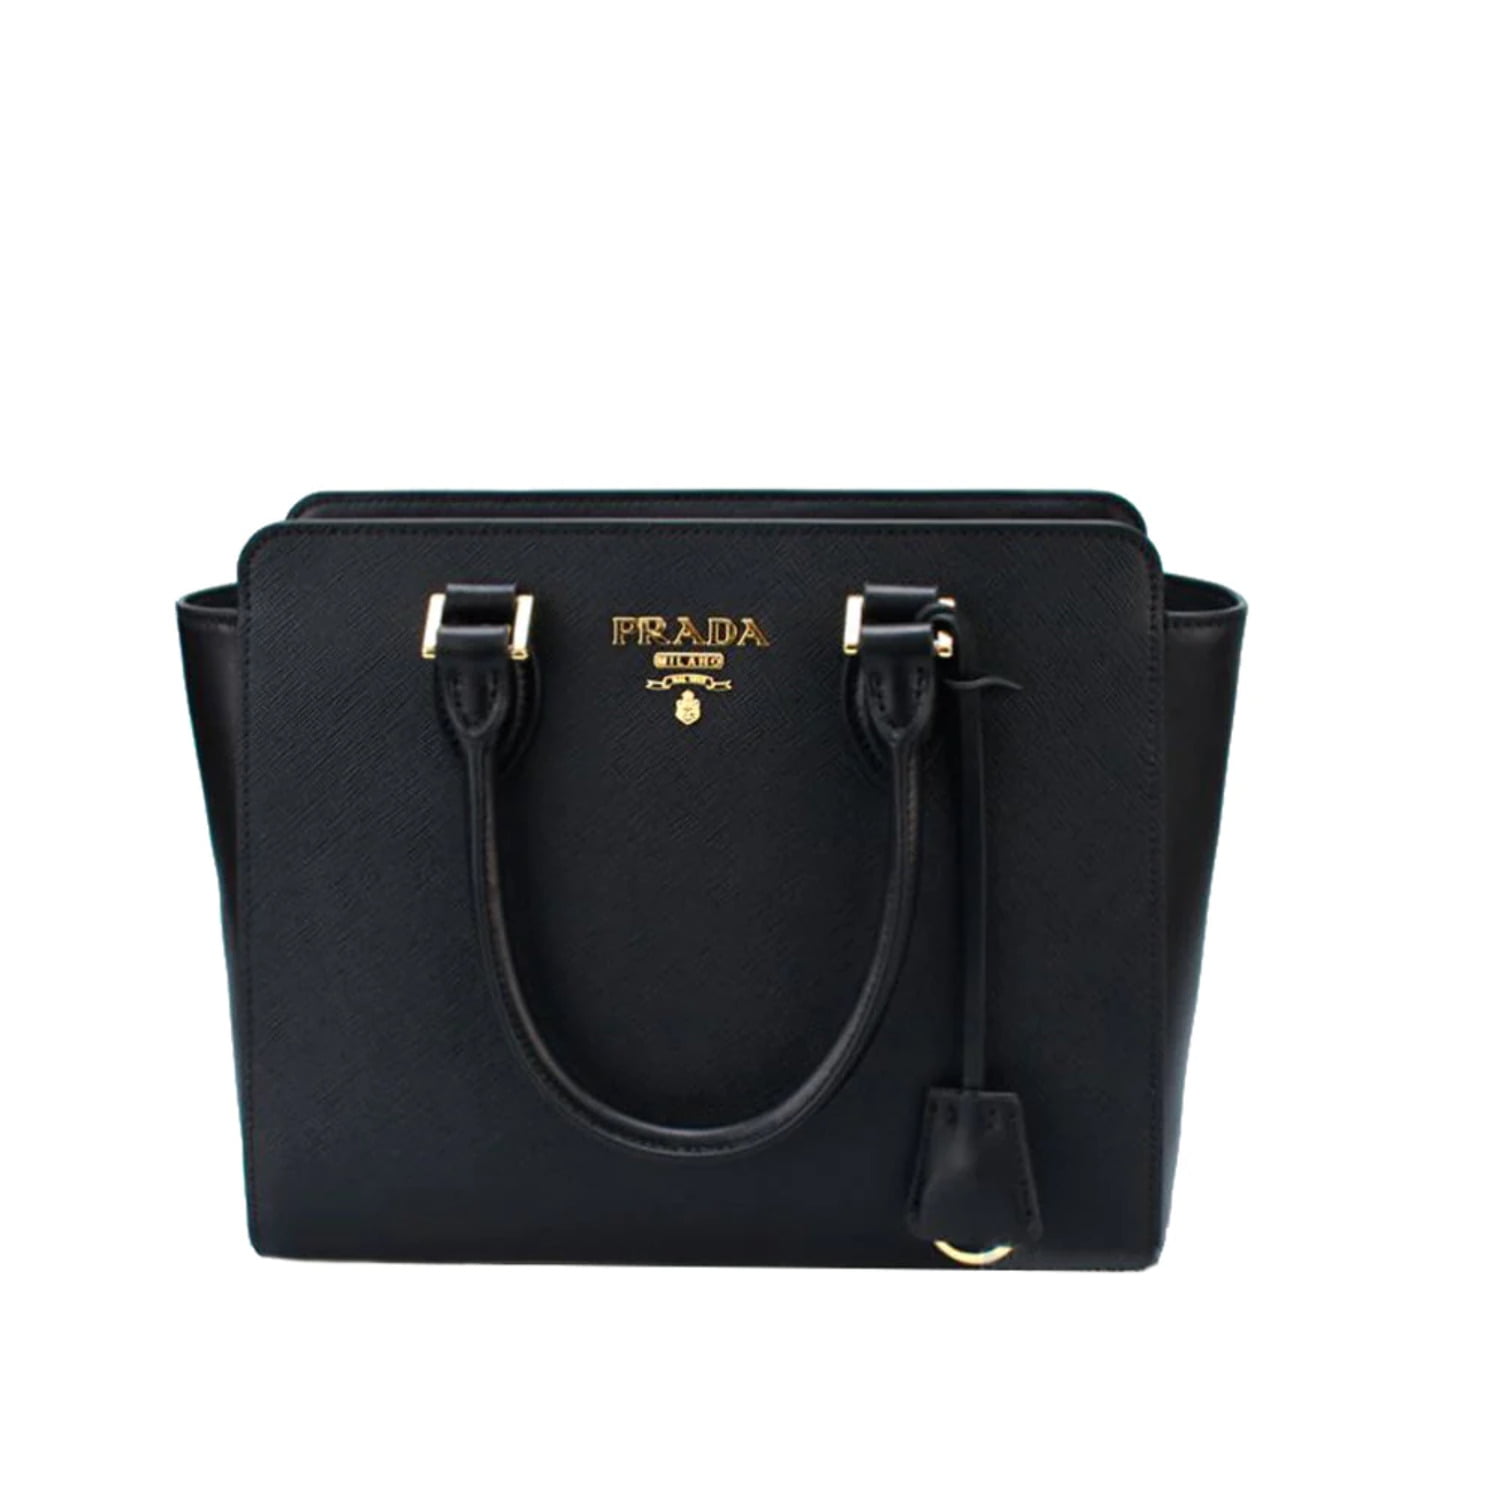 New Prada Tessuto Nylon Black Convertible Shopping Tote Satchel Bag 1BG189  